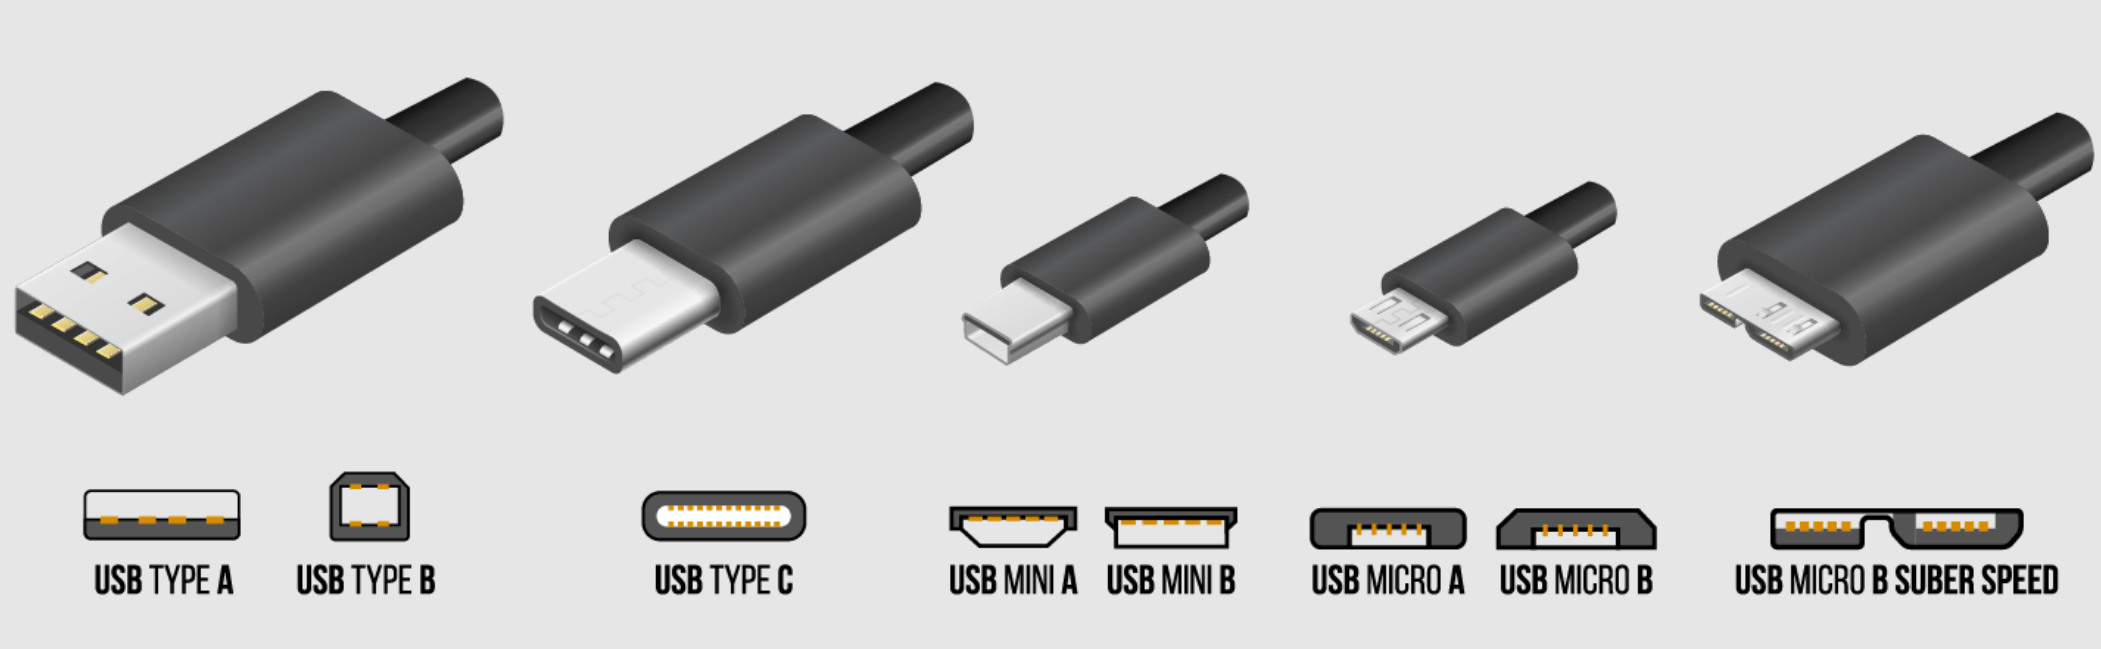 USB 2.0 vs USB 3.0 Full Comparison - History-Computer